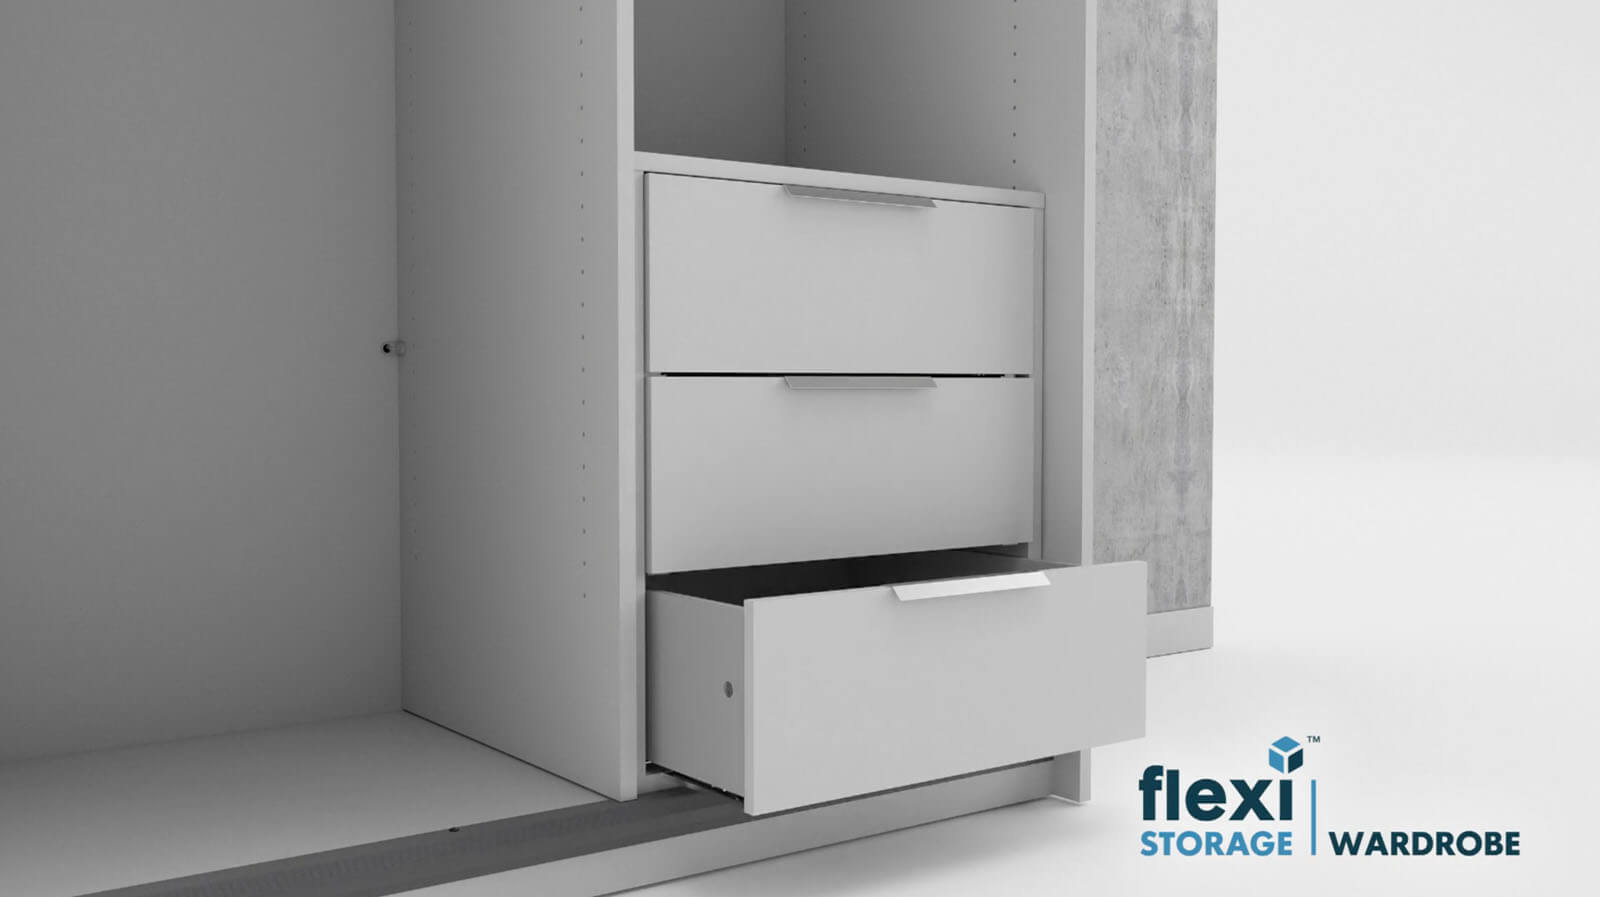 How To Build Flexi Storage